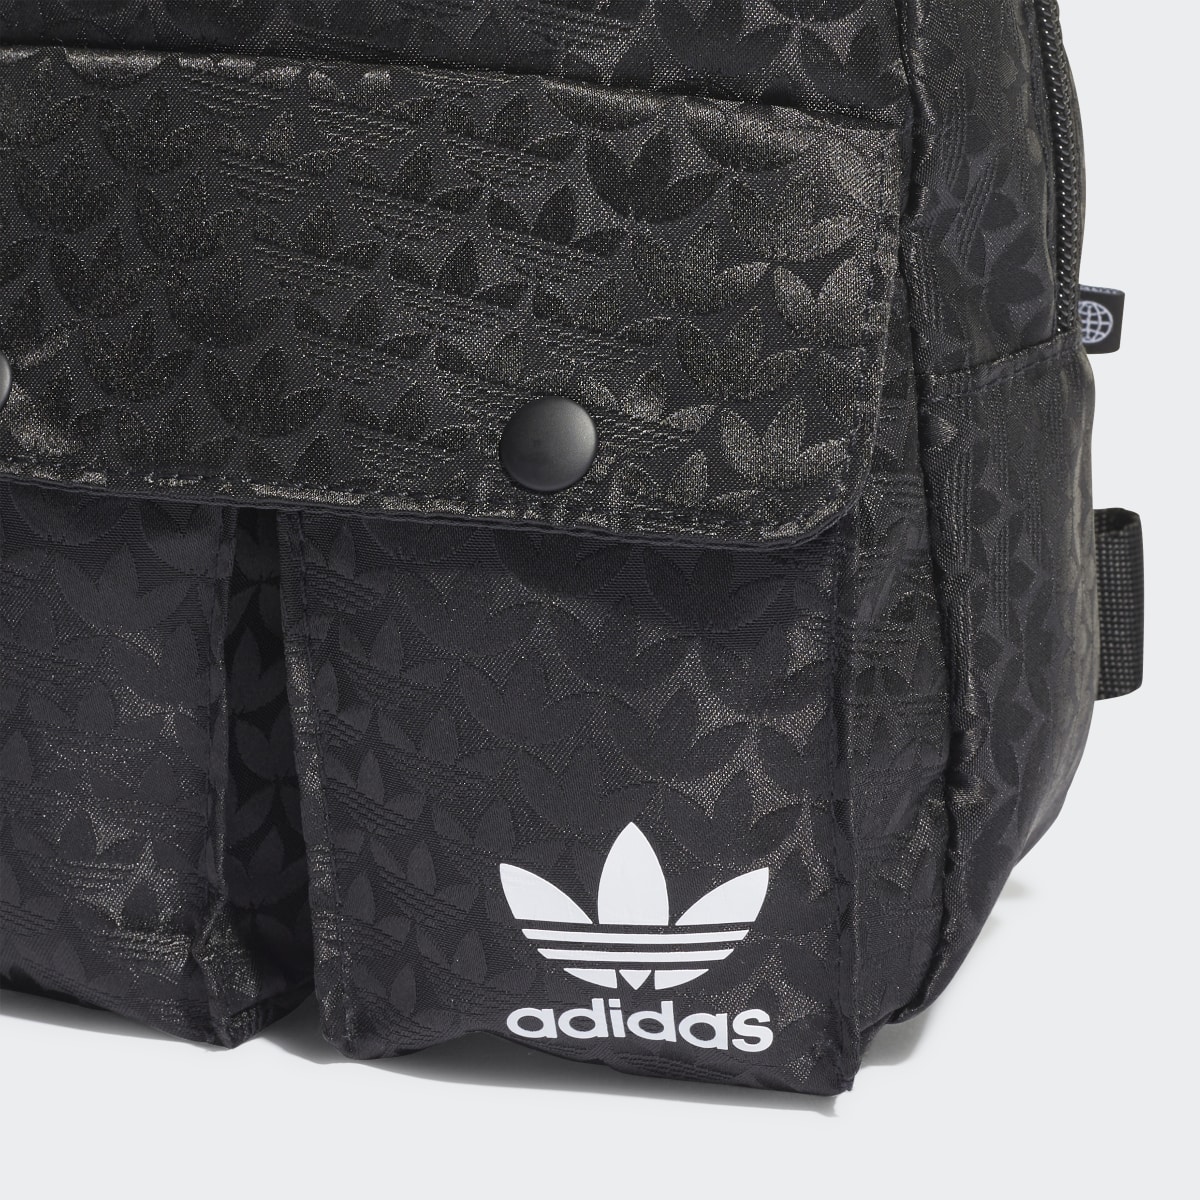 Adidas Mini sac à dos. 6